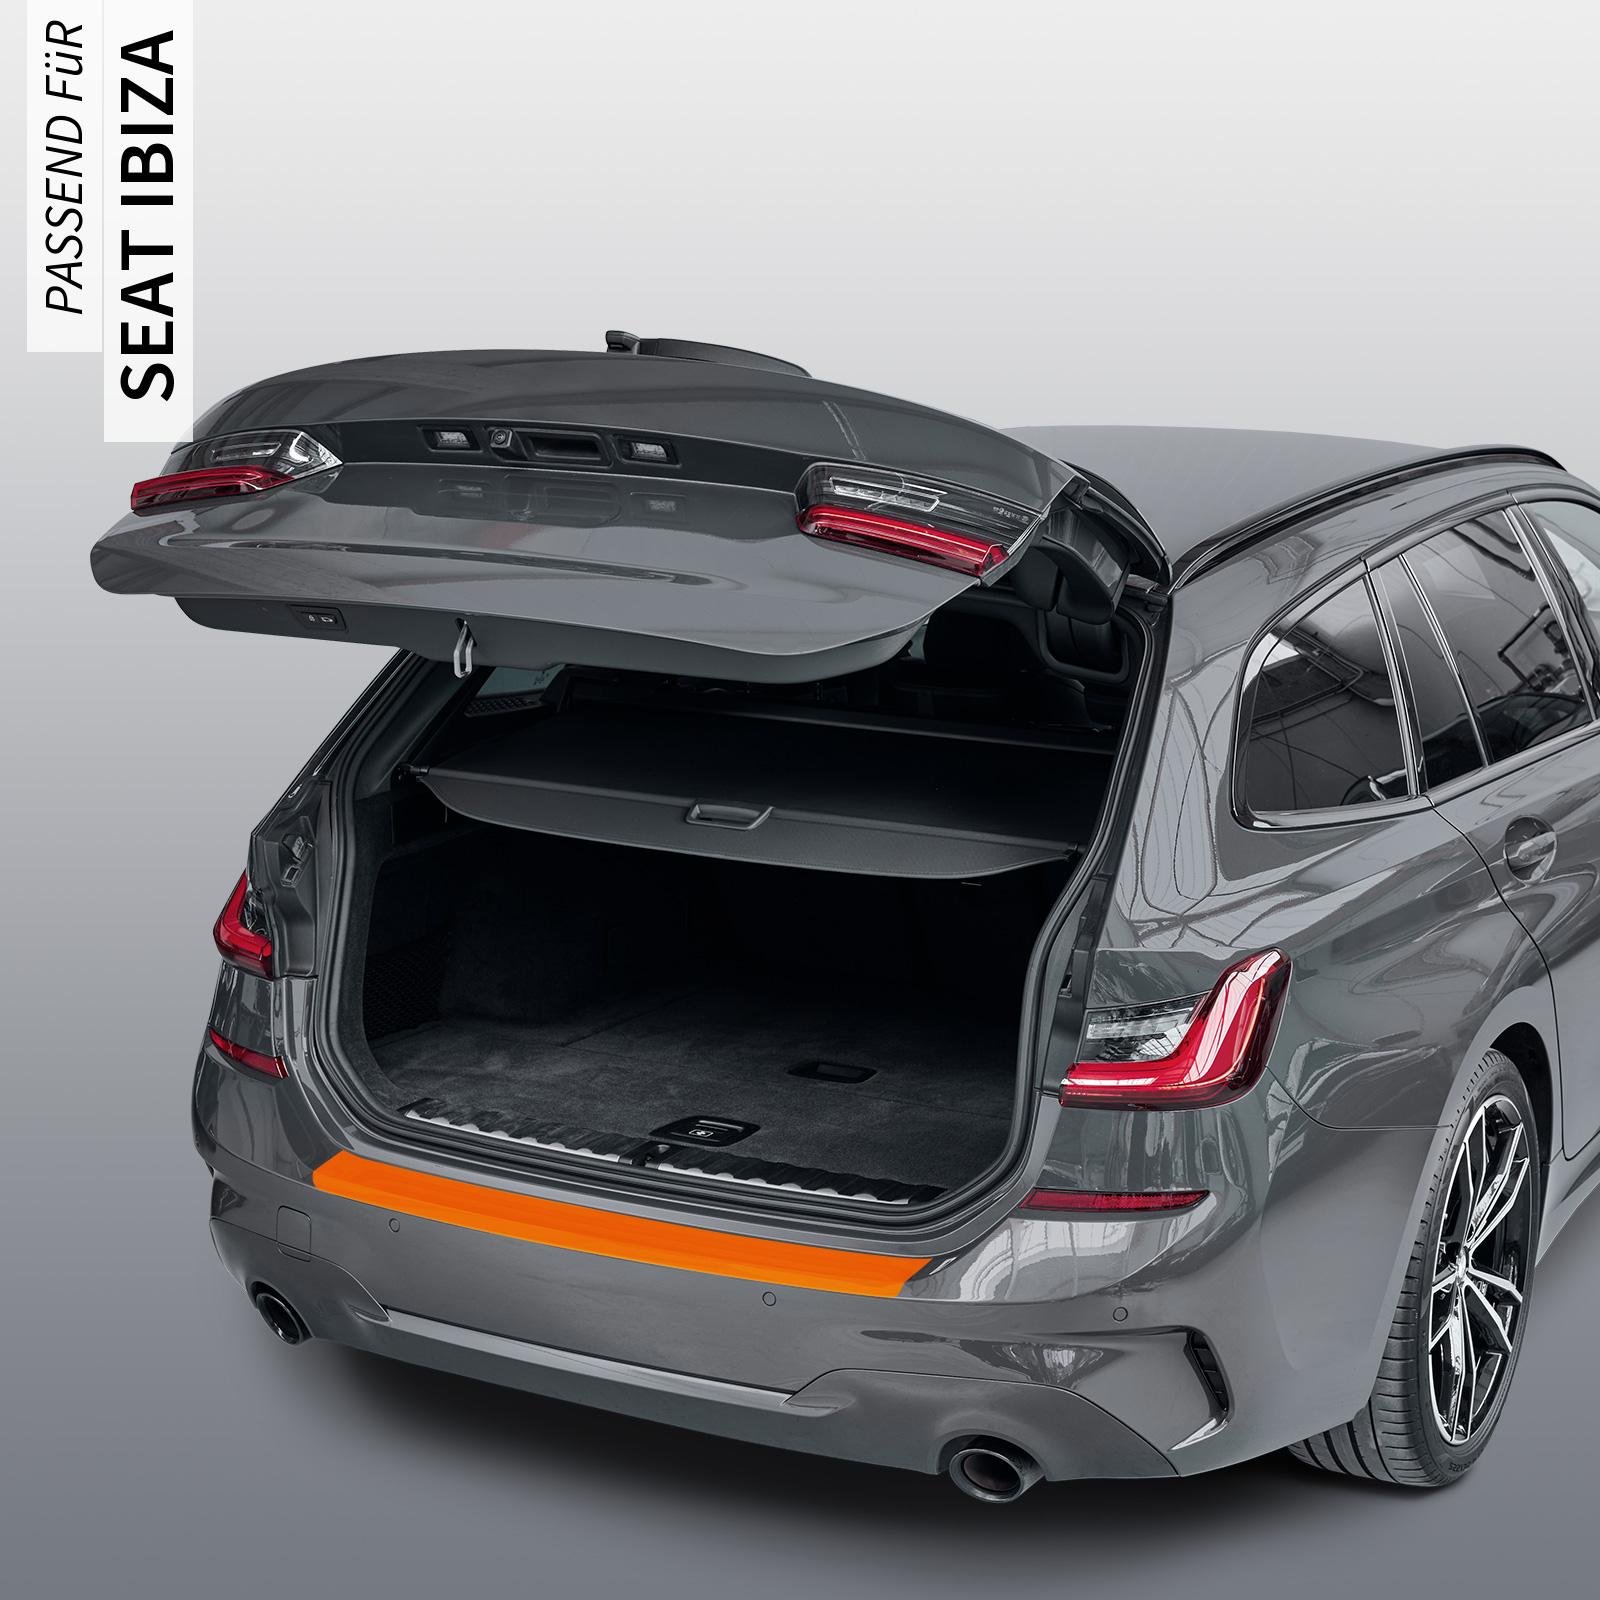 Ladekantenschutzfolie - Transparent Glatt MATT 110 µm stark  für Seat Ibiza Typ 6J + 6P, Facelift, BJ 2008-2017